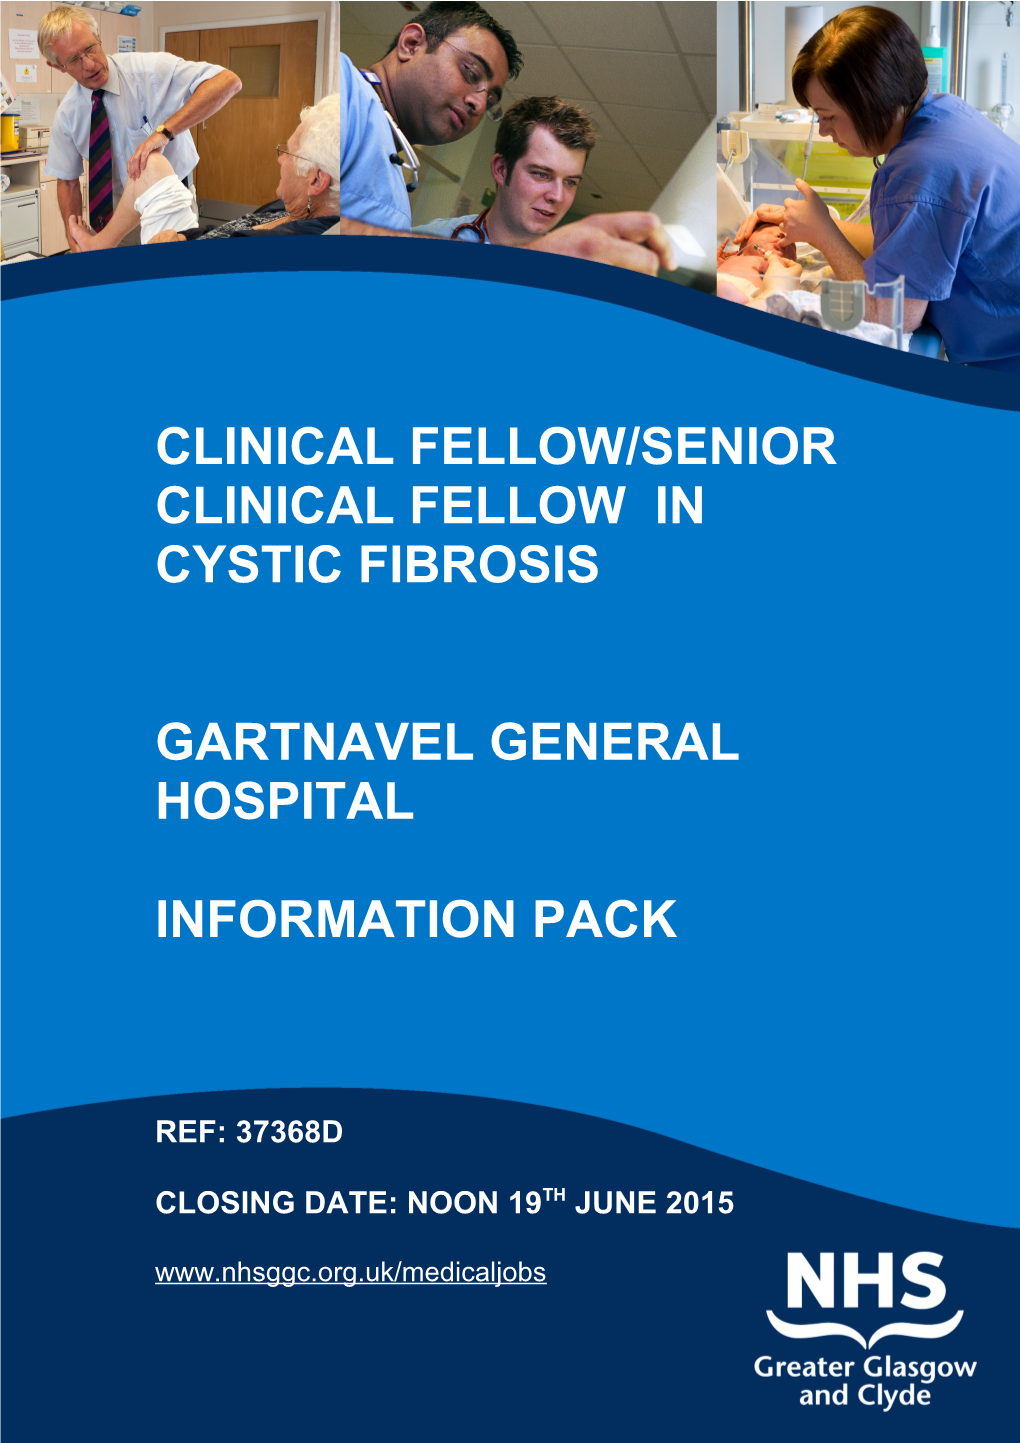 CLINICAL FELLOW/Senior Clinical Fellow in CYSTIC FIBROSIS